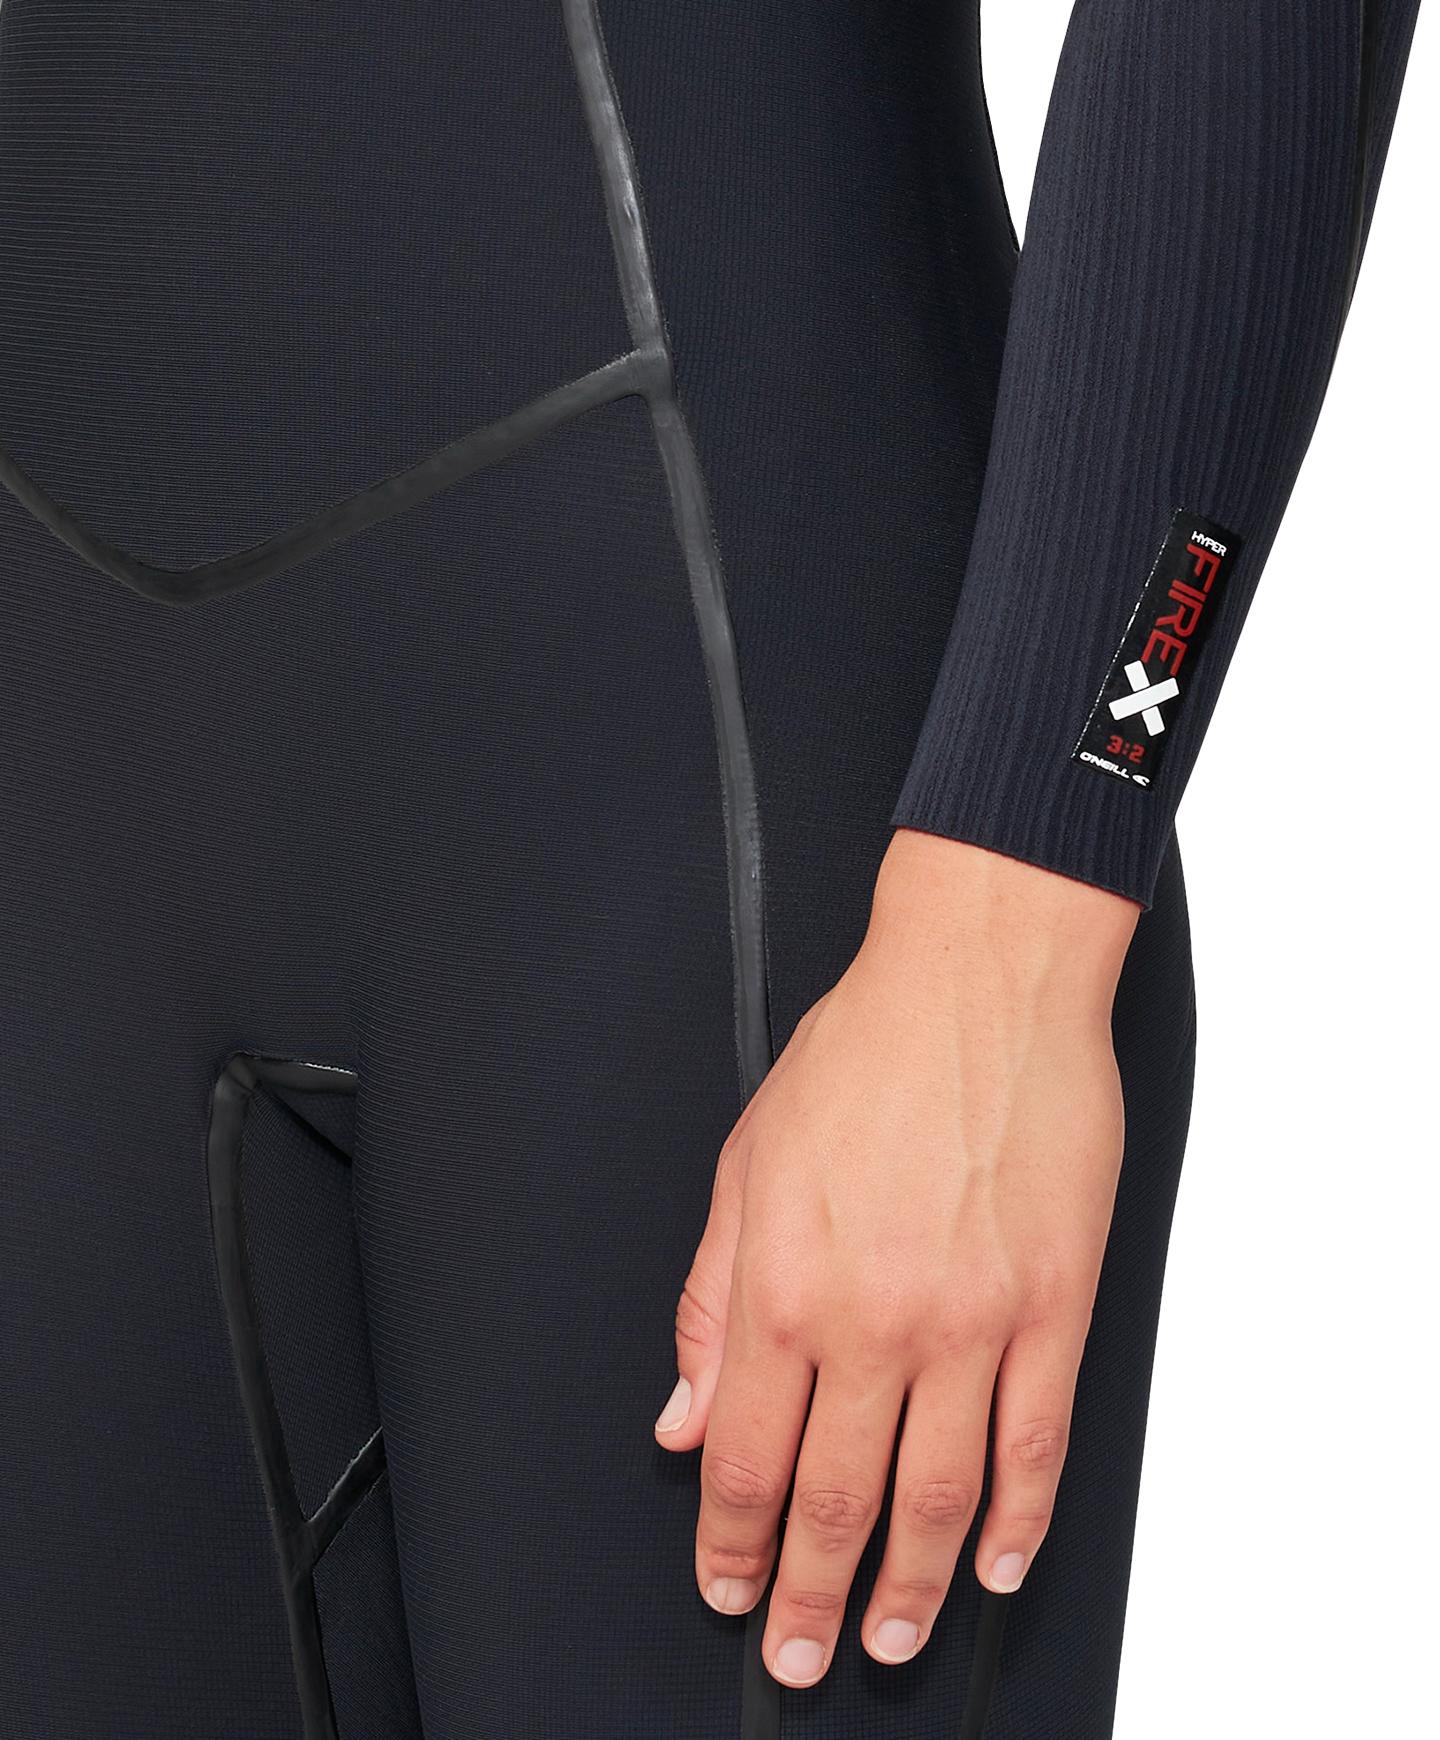 Women's HyperFire X 3/2mm Steamer Chest Zip Wetsuit - Black